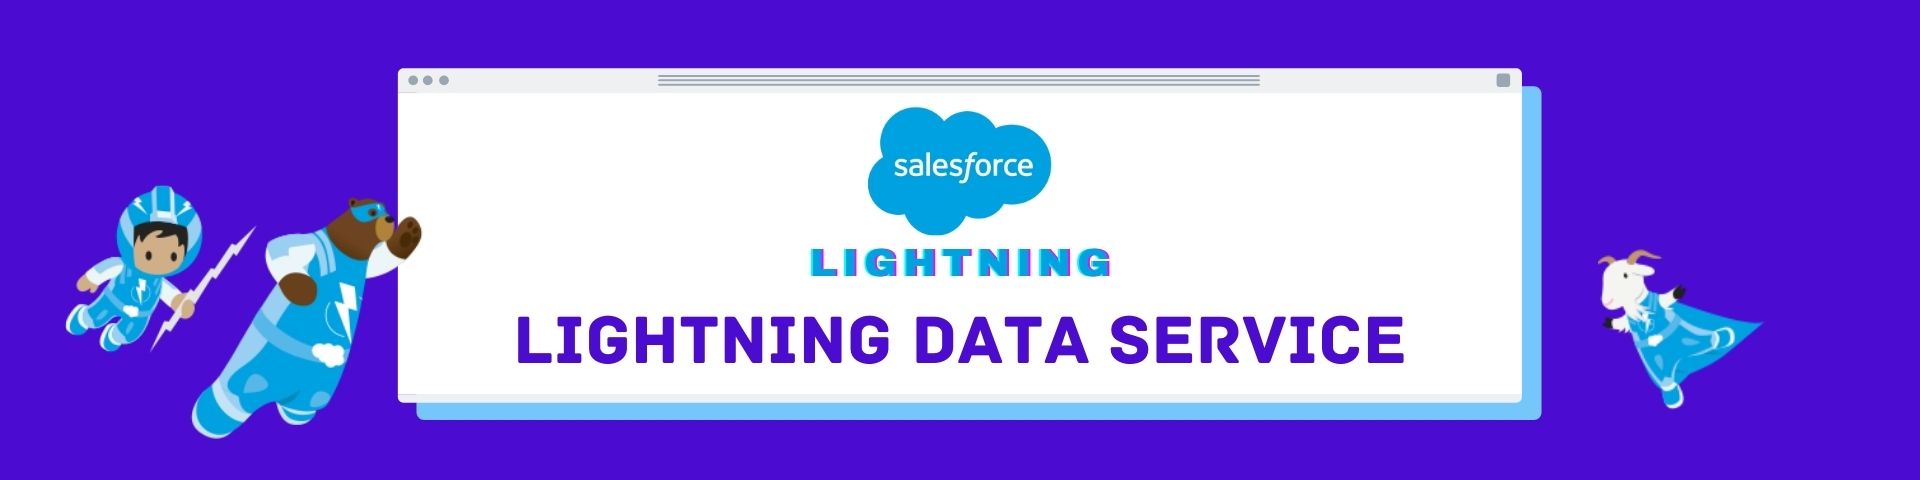 Salesforce Lightning Data service